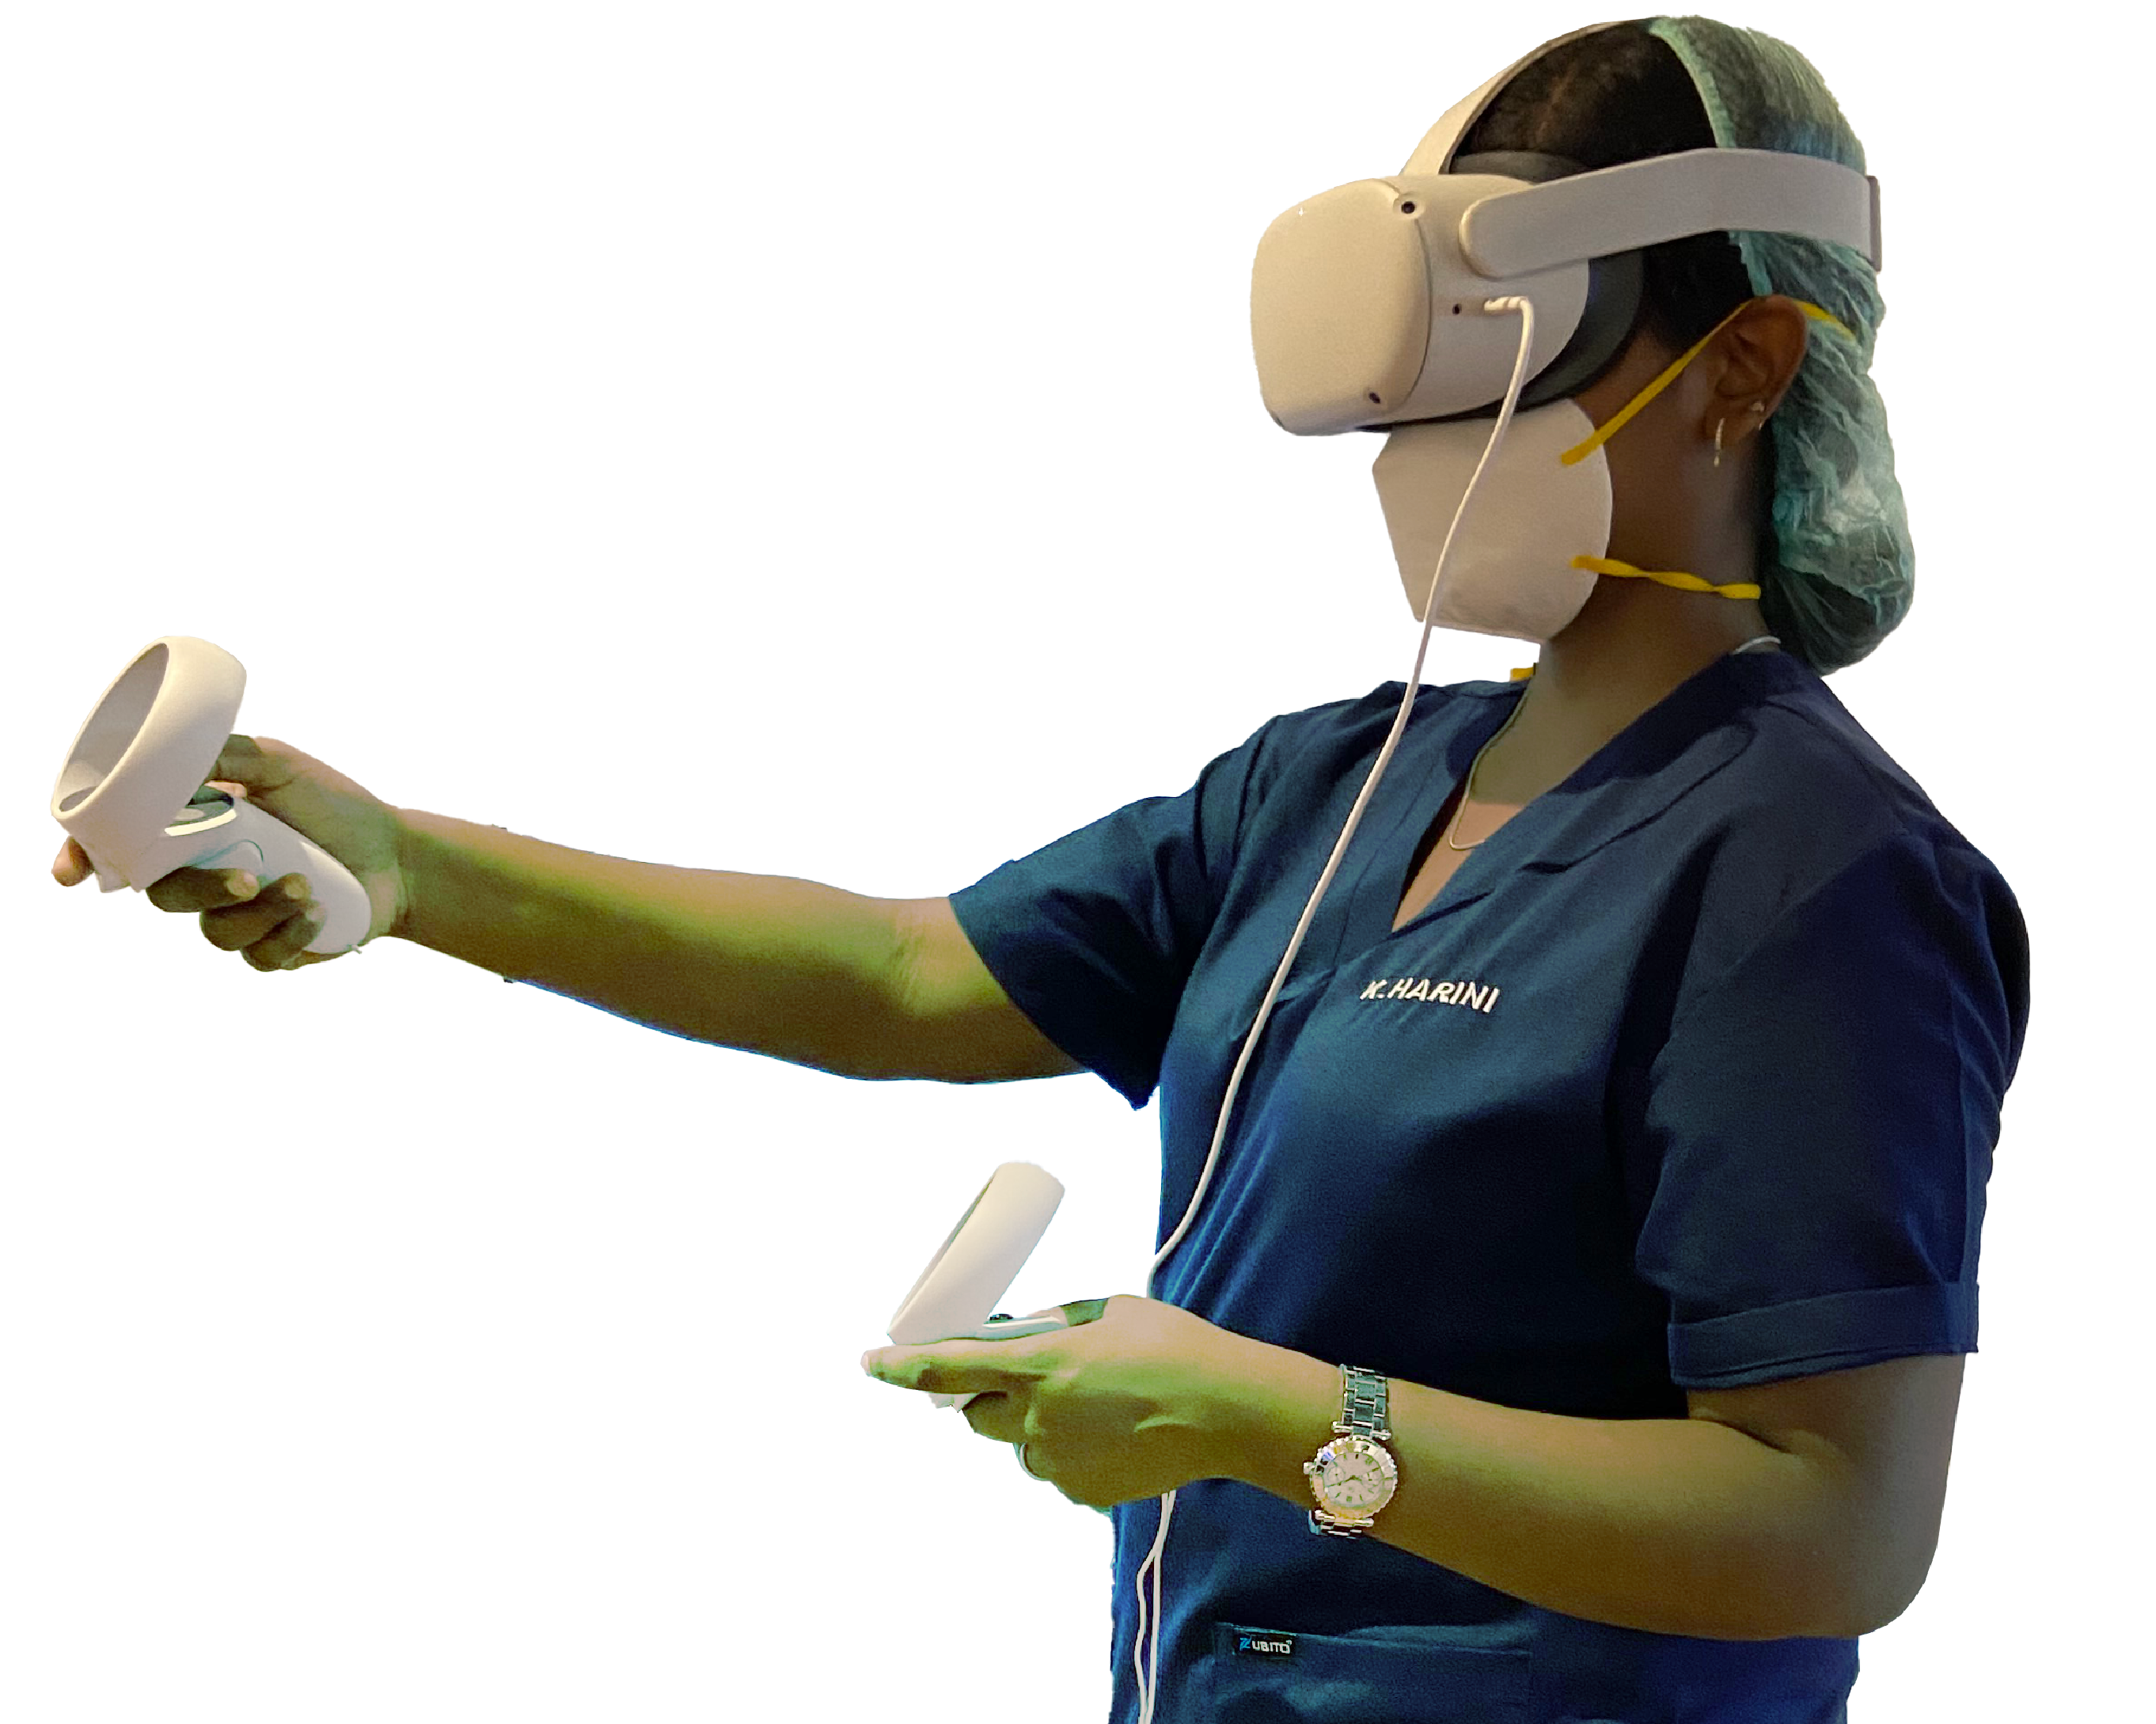 VR in medical training